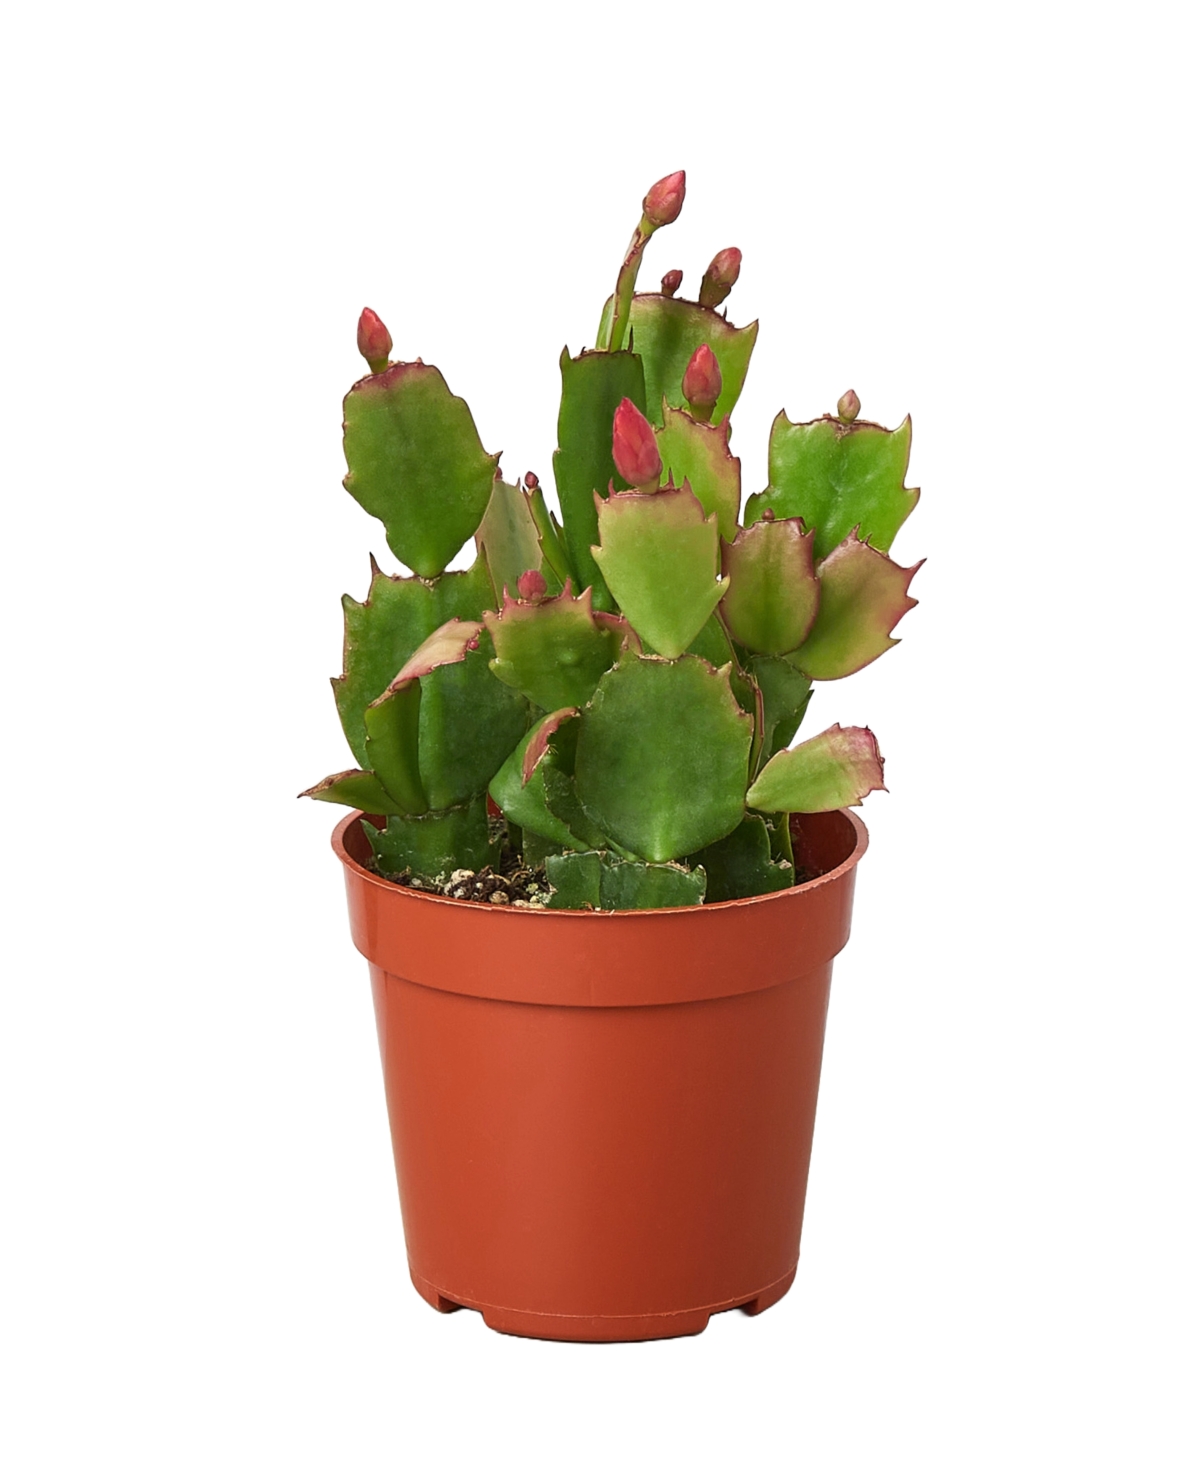 Zygo Christmas Cactus in 4" Pot